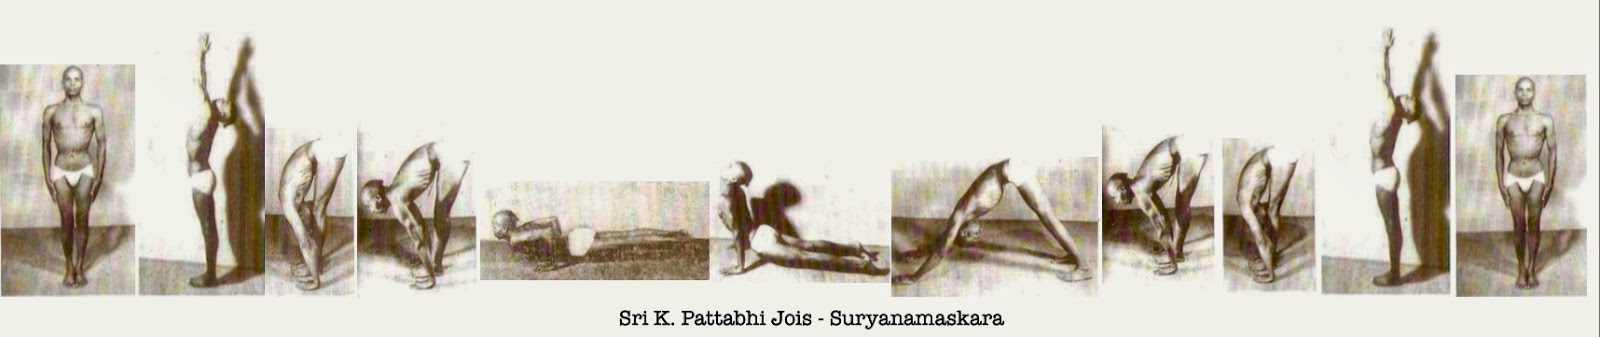 Mantra Yoga Samhita Pdf